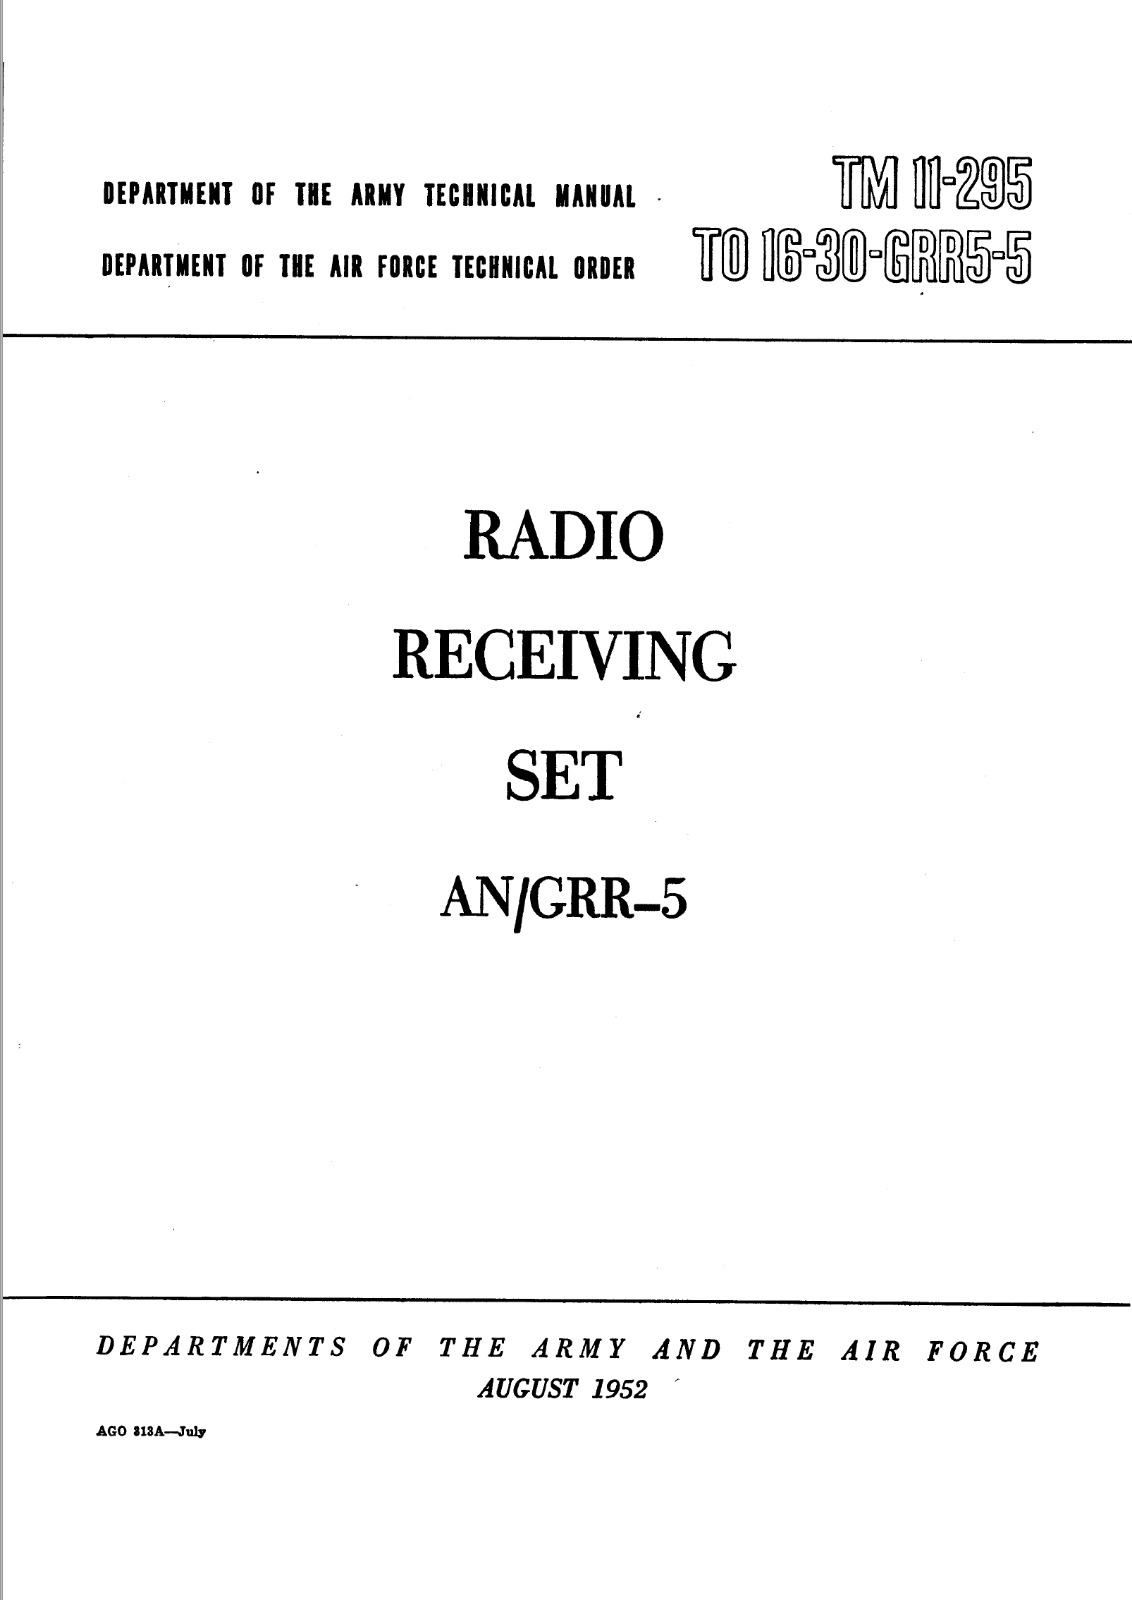 129 Page 1952 TM 11-295 AN/GRR-5 PP -308/URR Radio Receiving Set Manual on CD